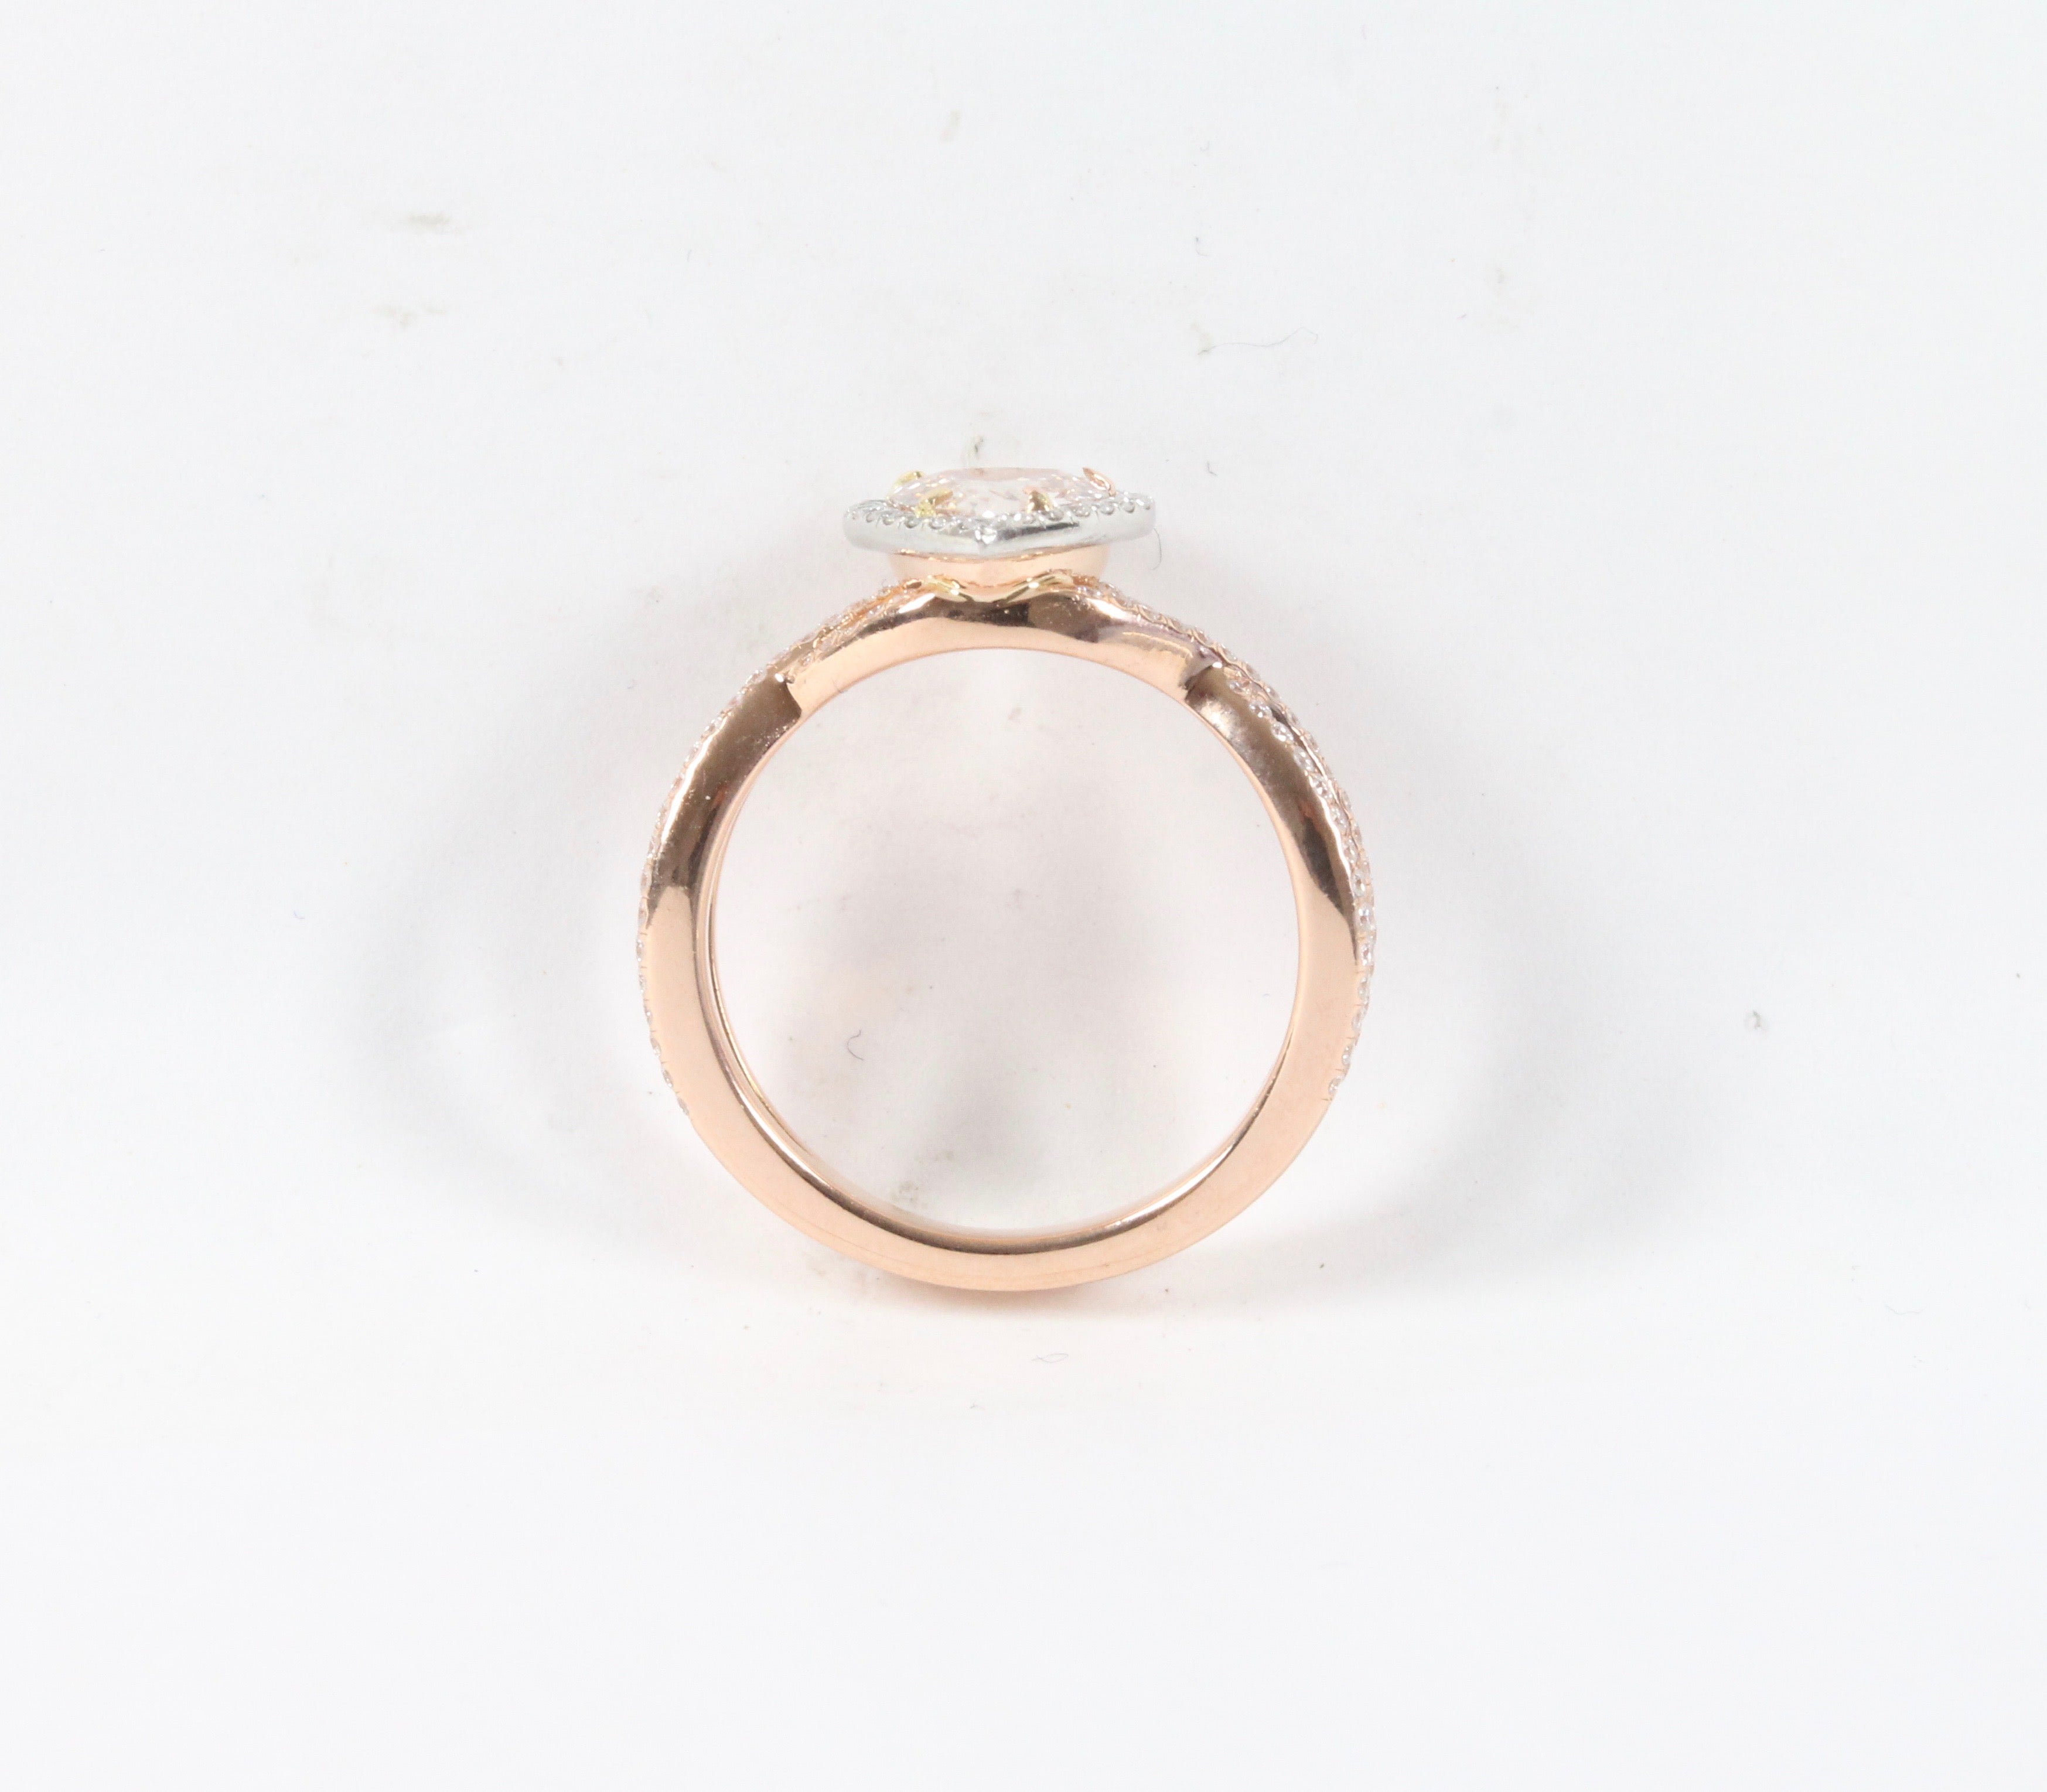 Vine Ring Pink & White Diamond | Wedding Bands & Co. Chicago